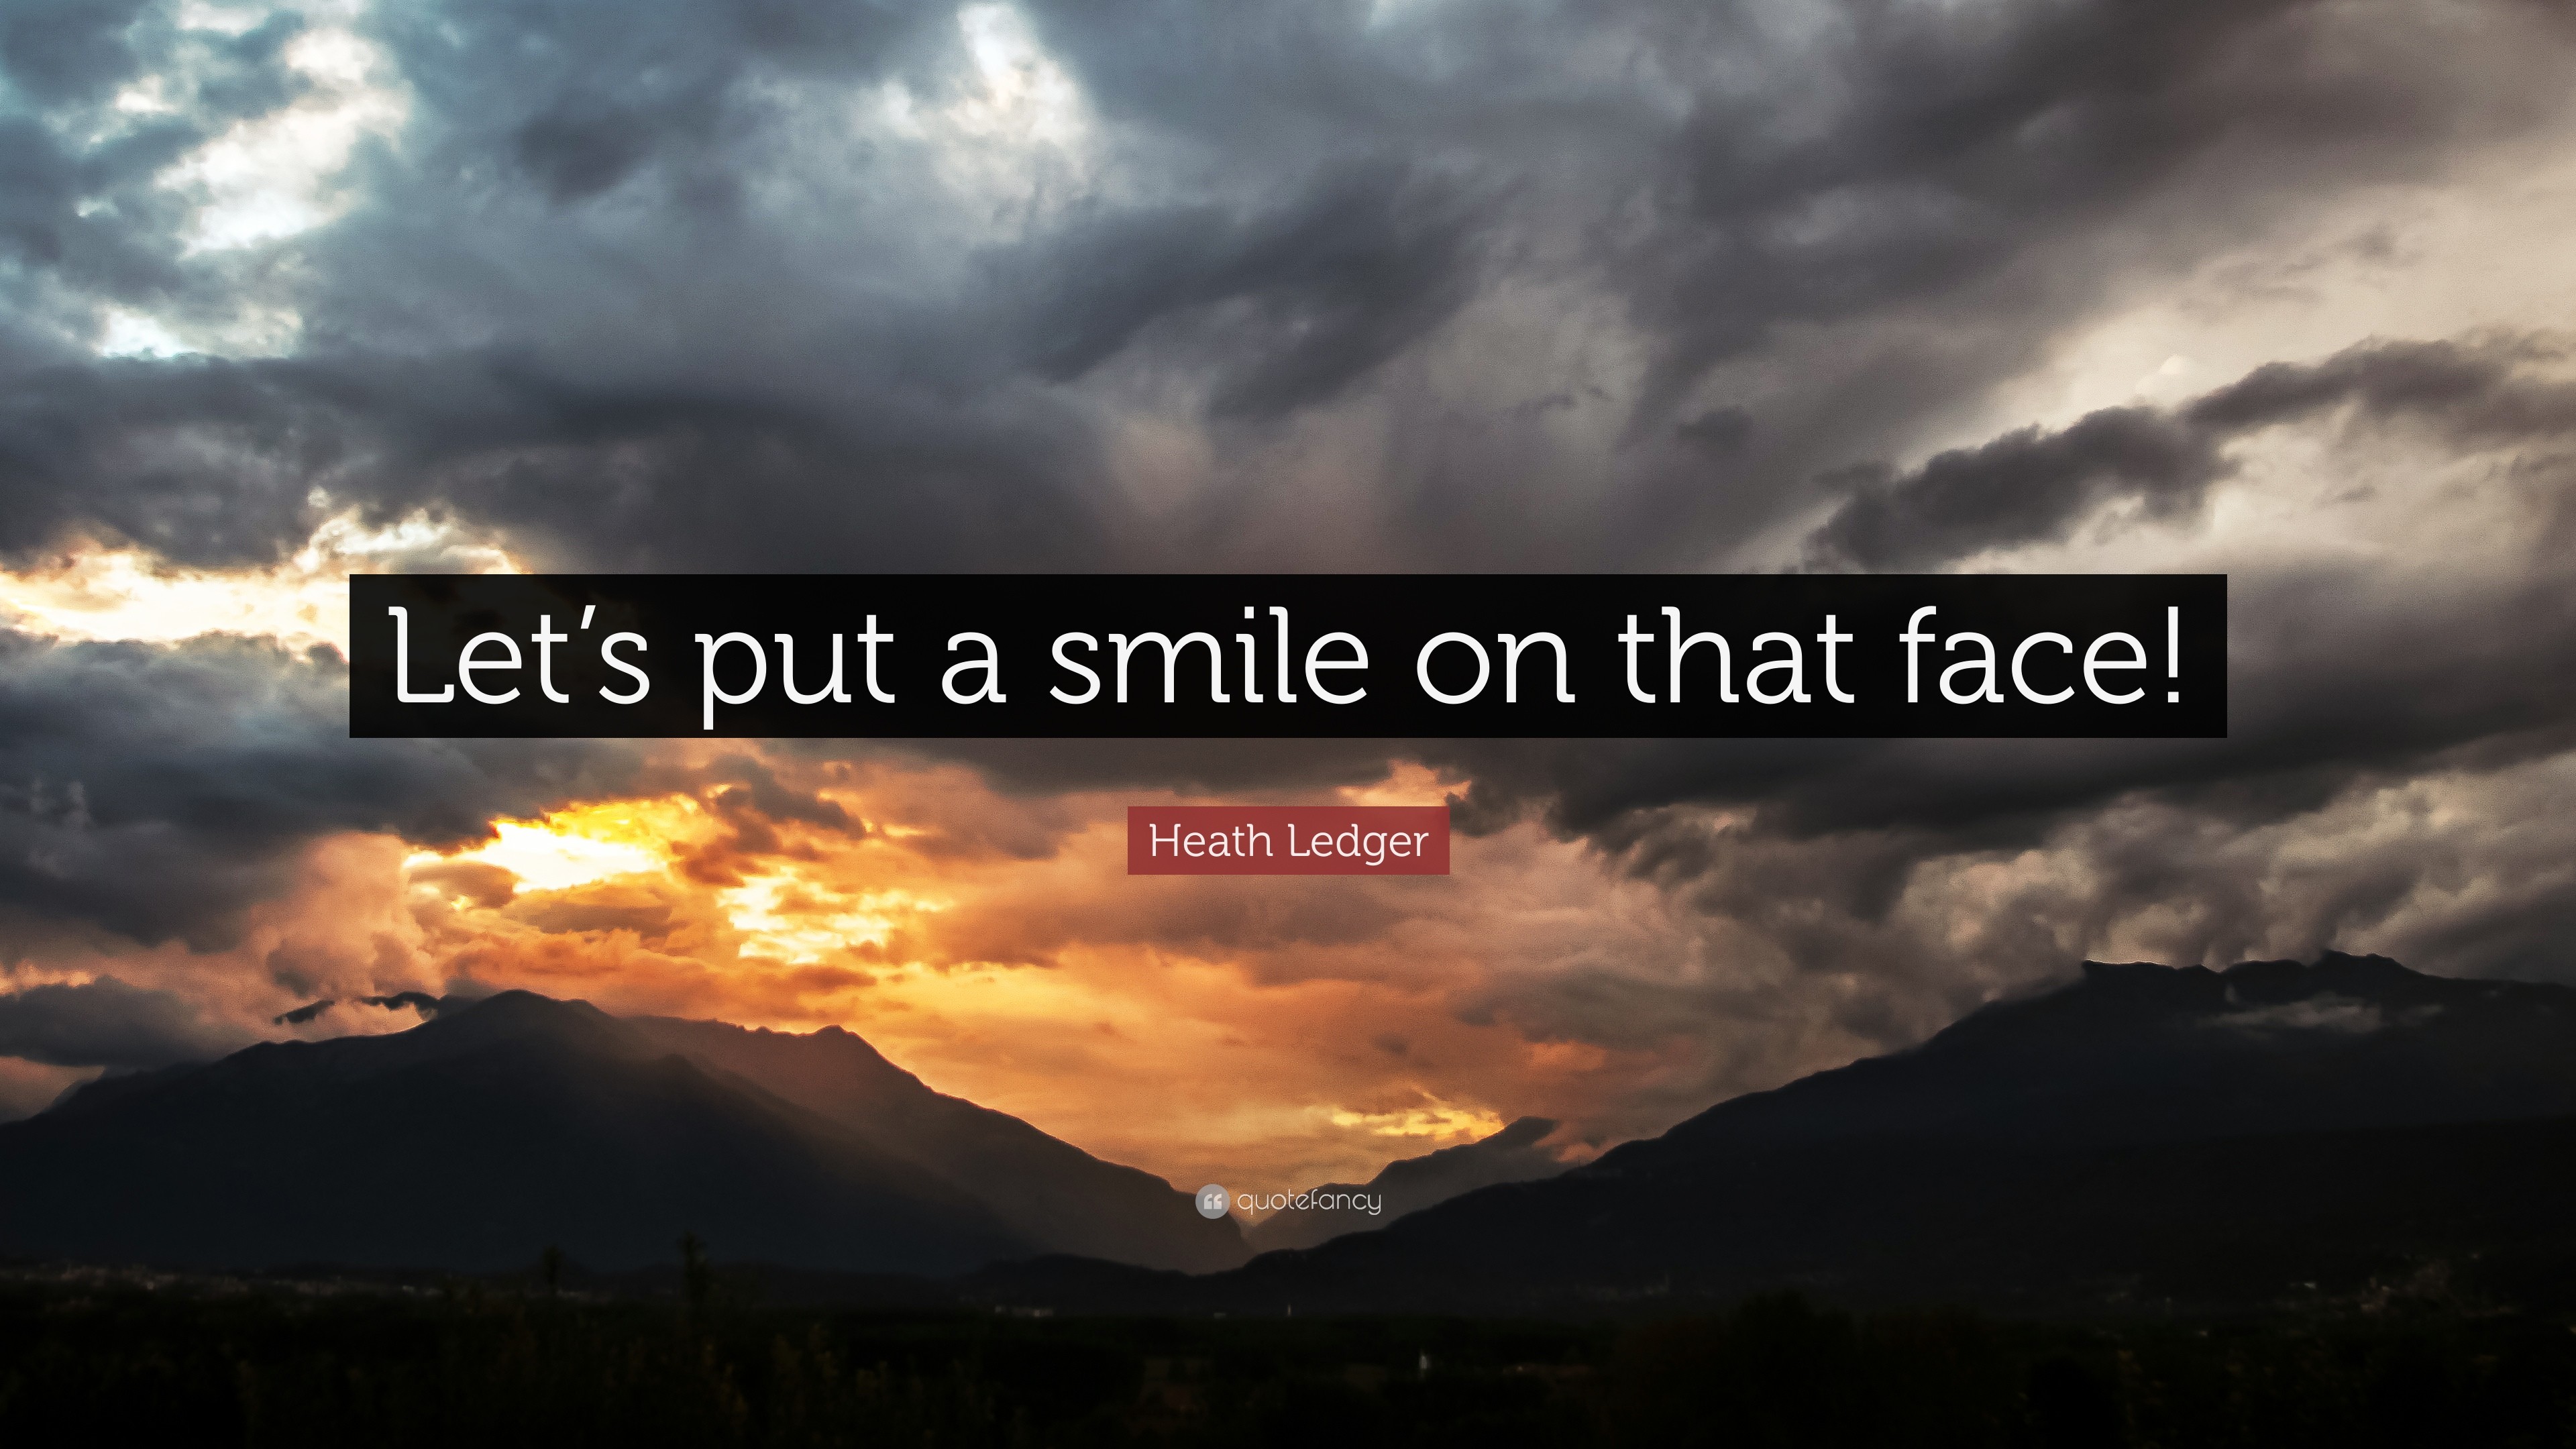 3840x2160 Heath Ledger Quote: “Let's put a smile on that face!”